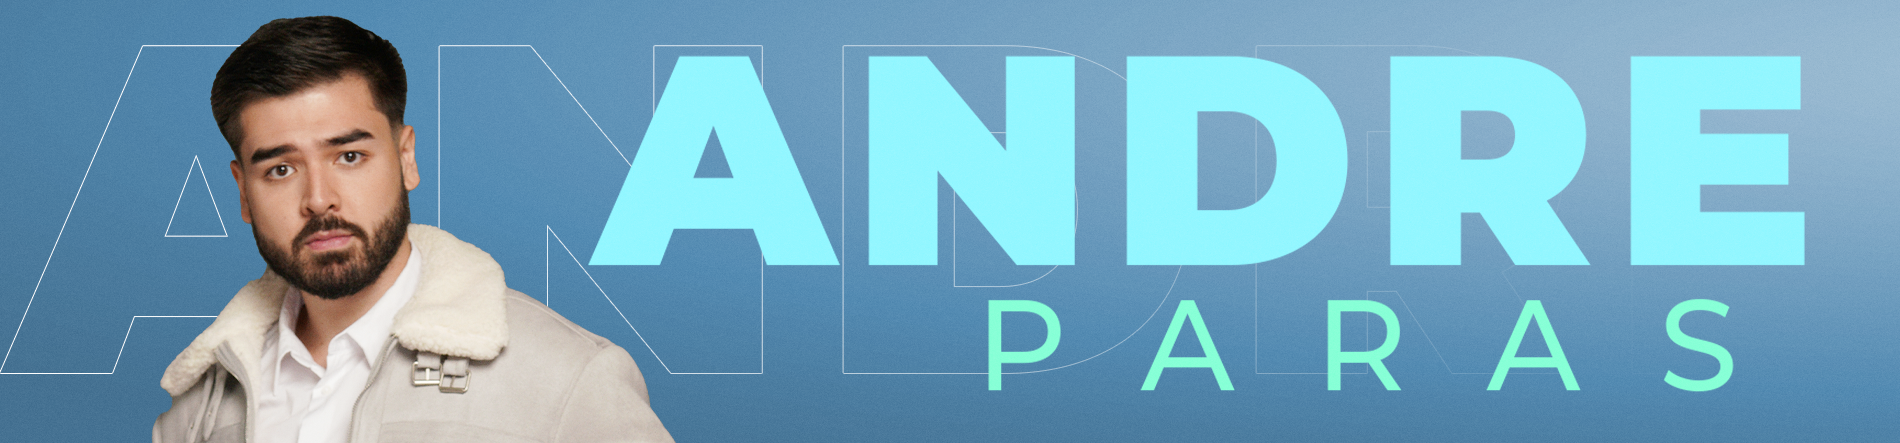 Andre Paras Desktop Banner